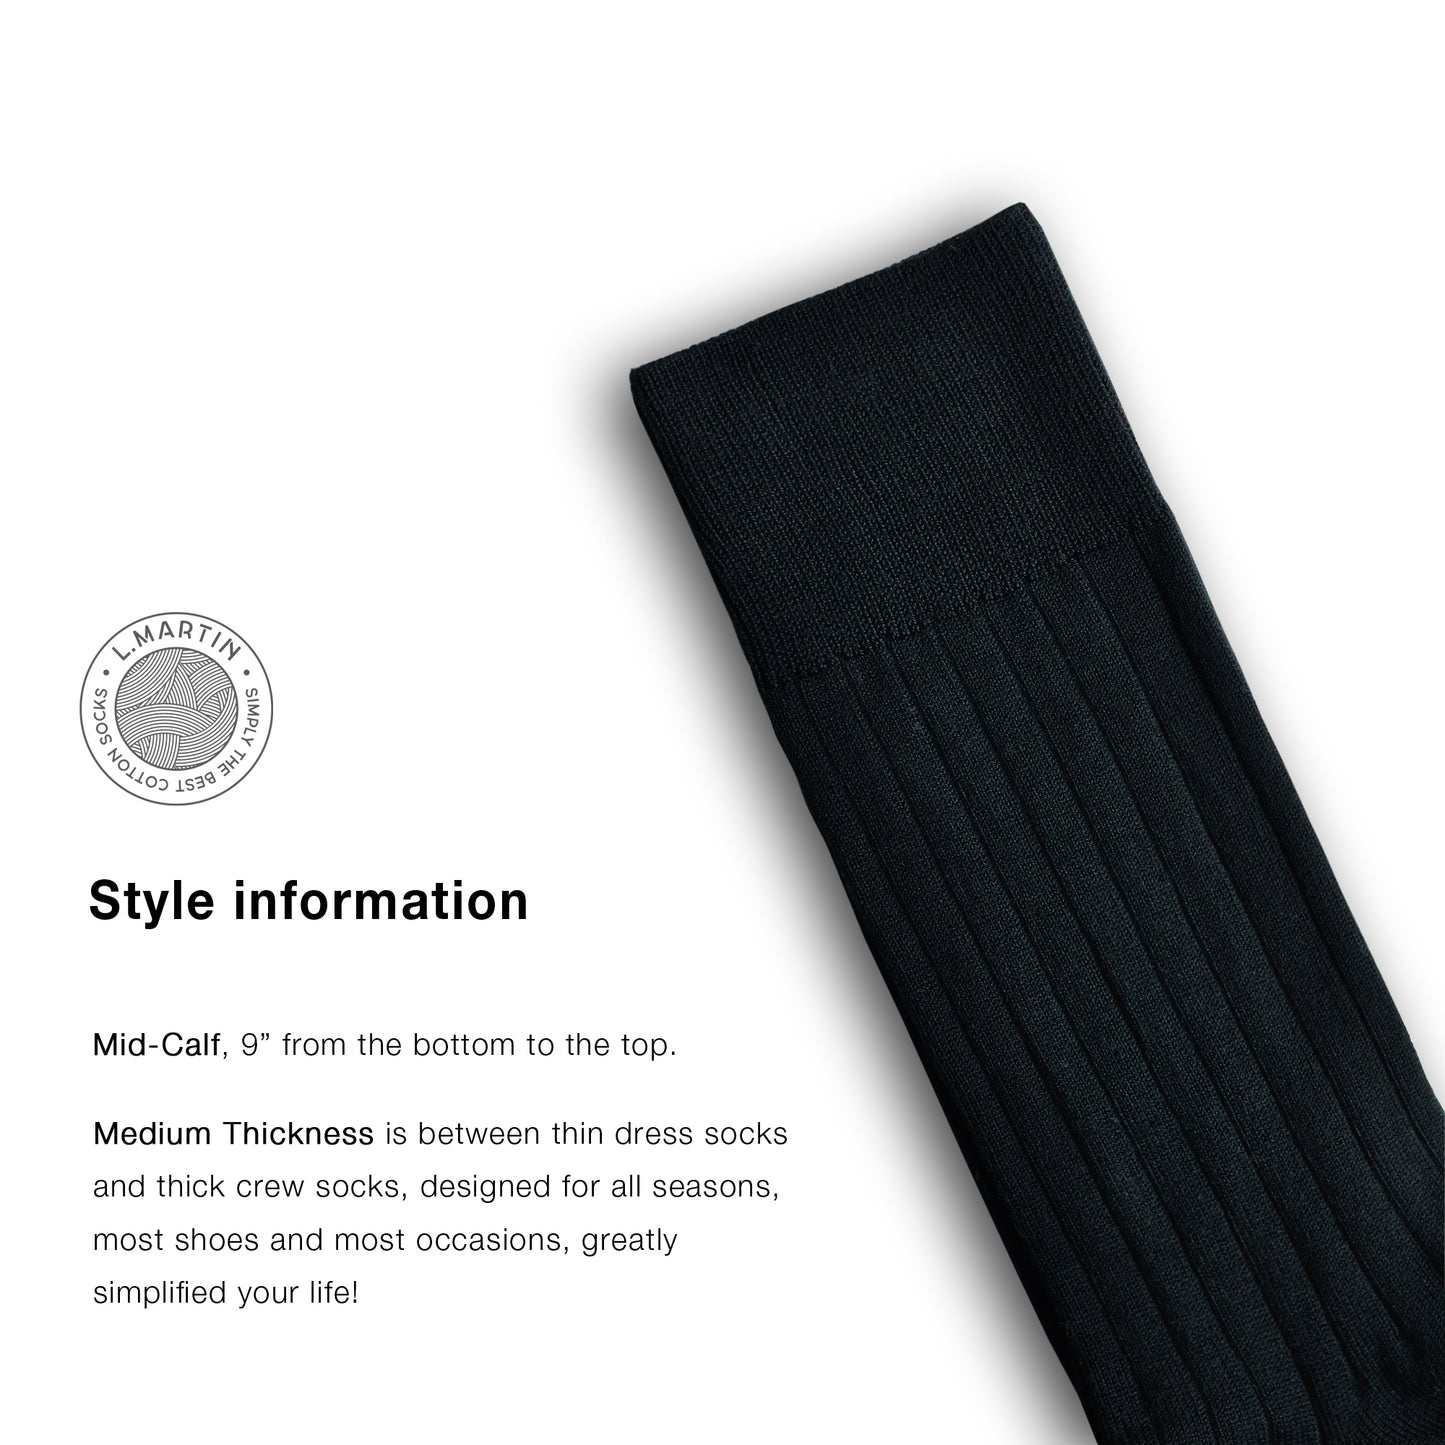 L.Martin Pima Cotton Crew Height Dress Socks for Men - 100% Cotton Interface - Black - 3Pair